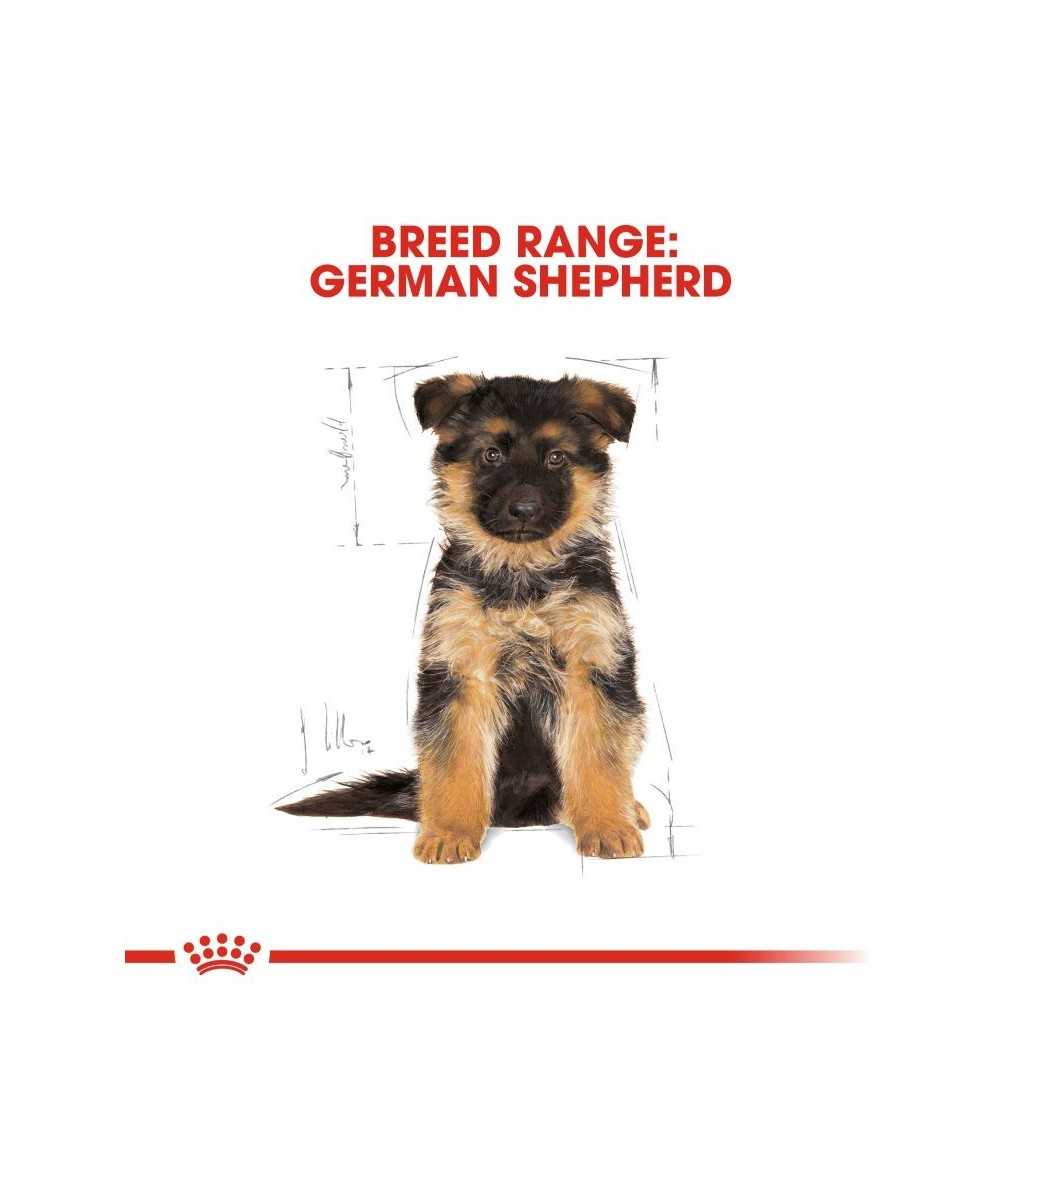 German Shepherd puppy 3kg